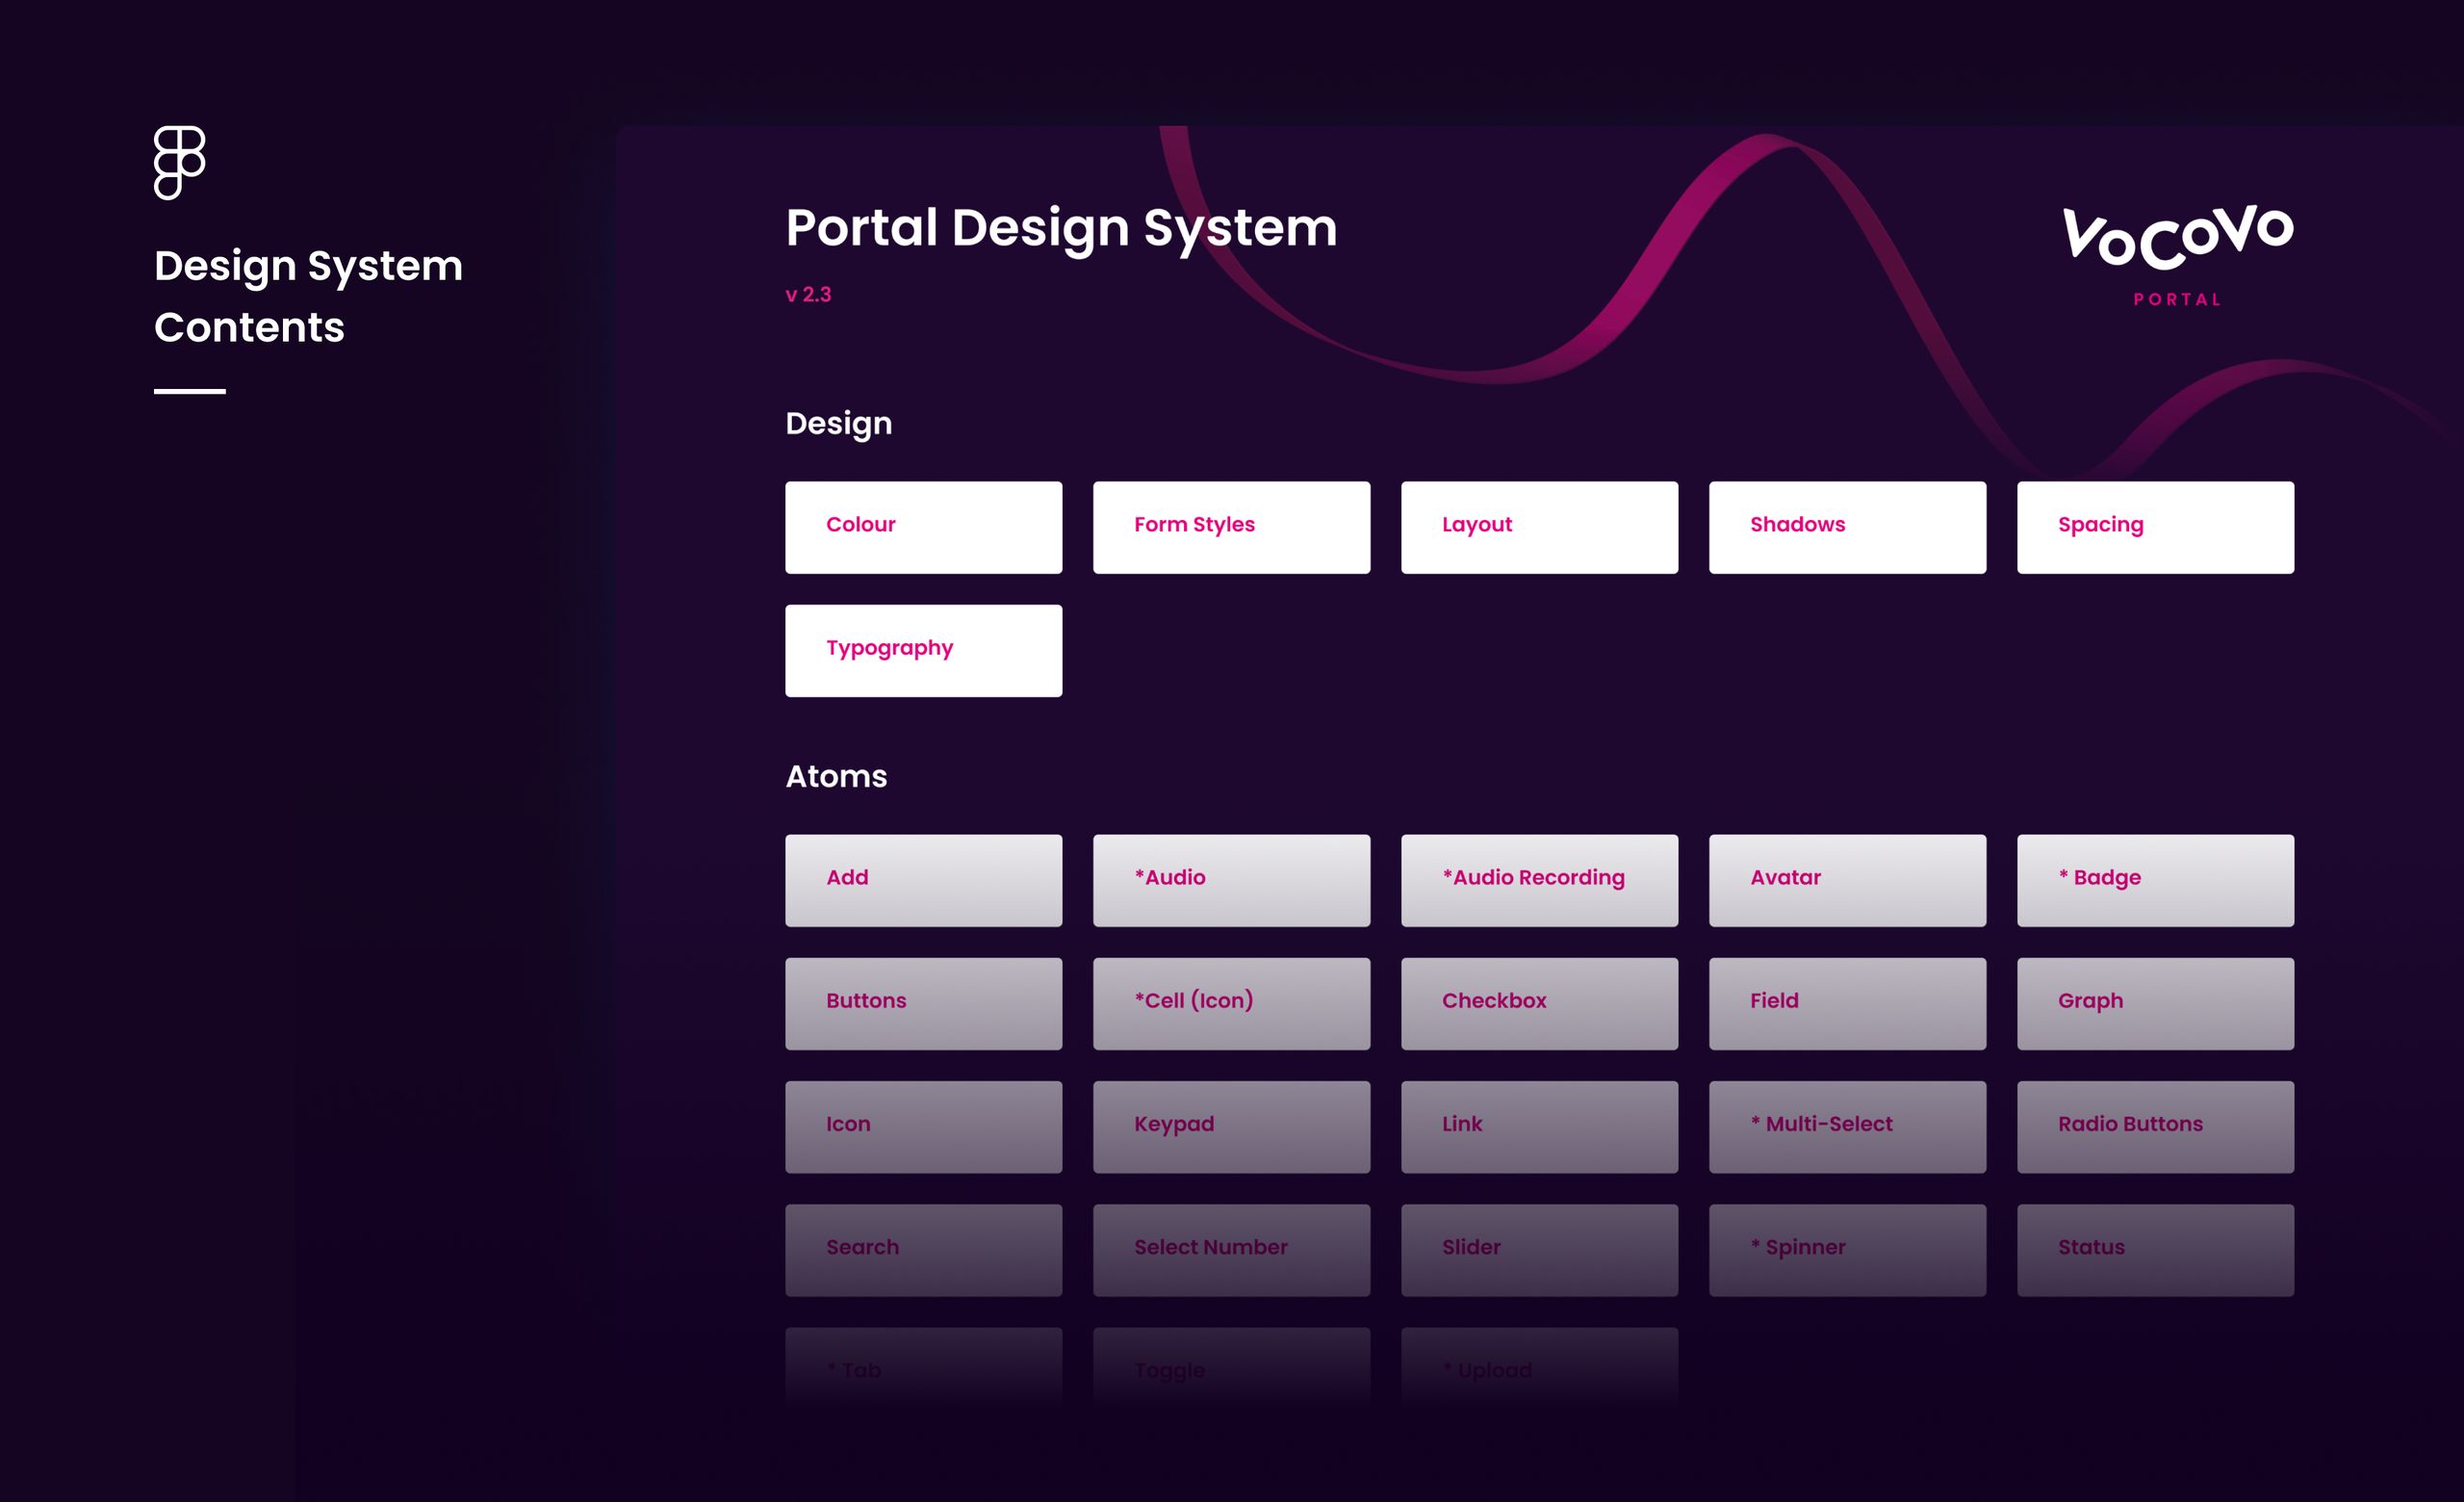 VoCoVo Portal Design System Contents